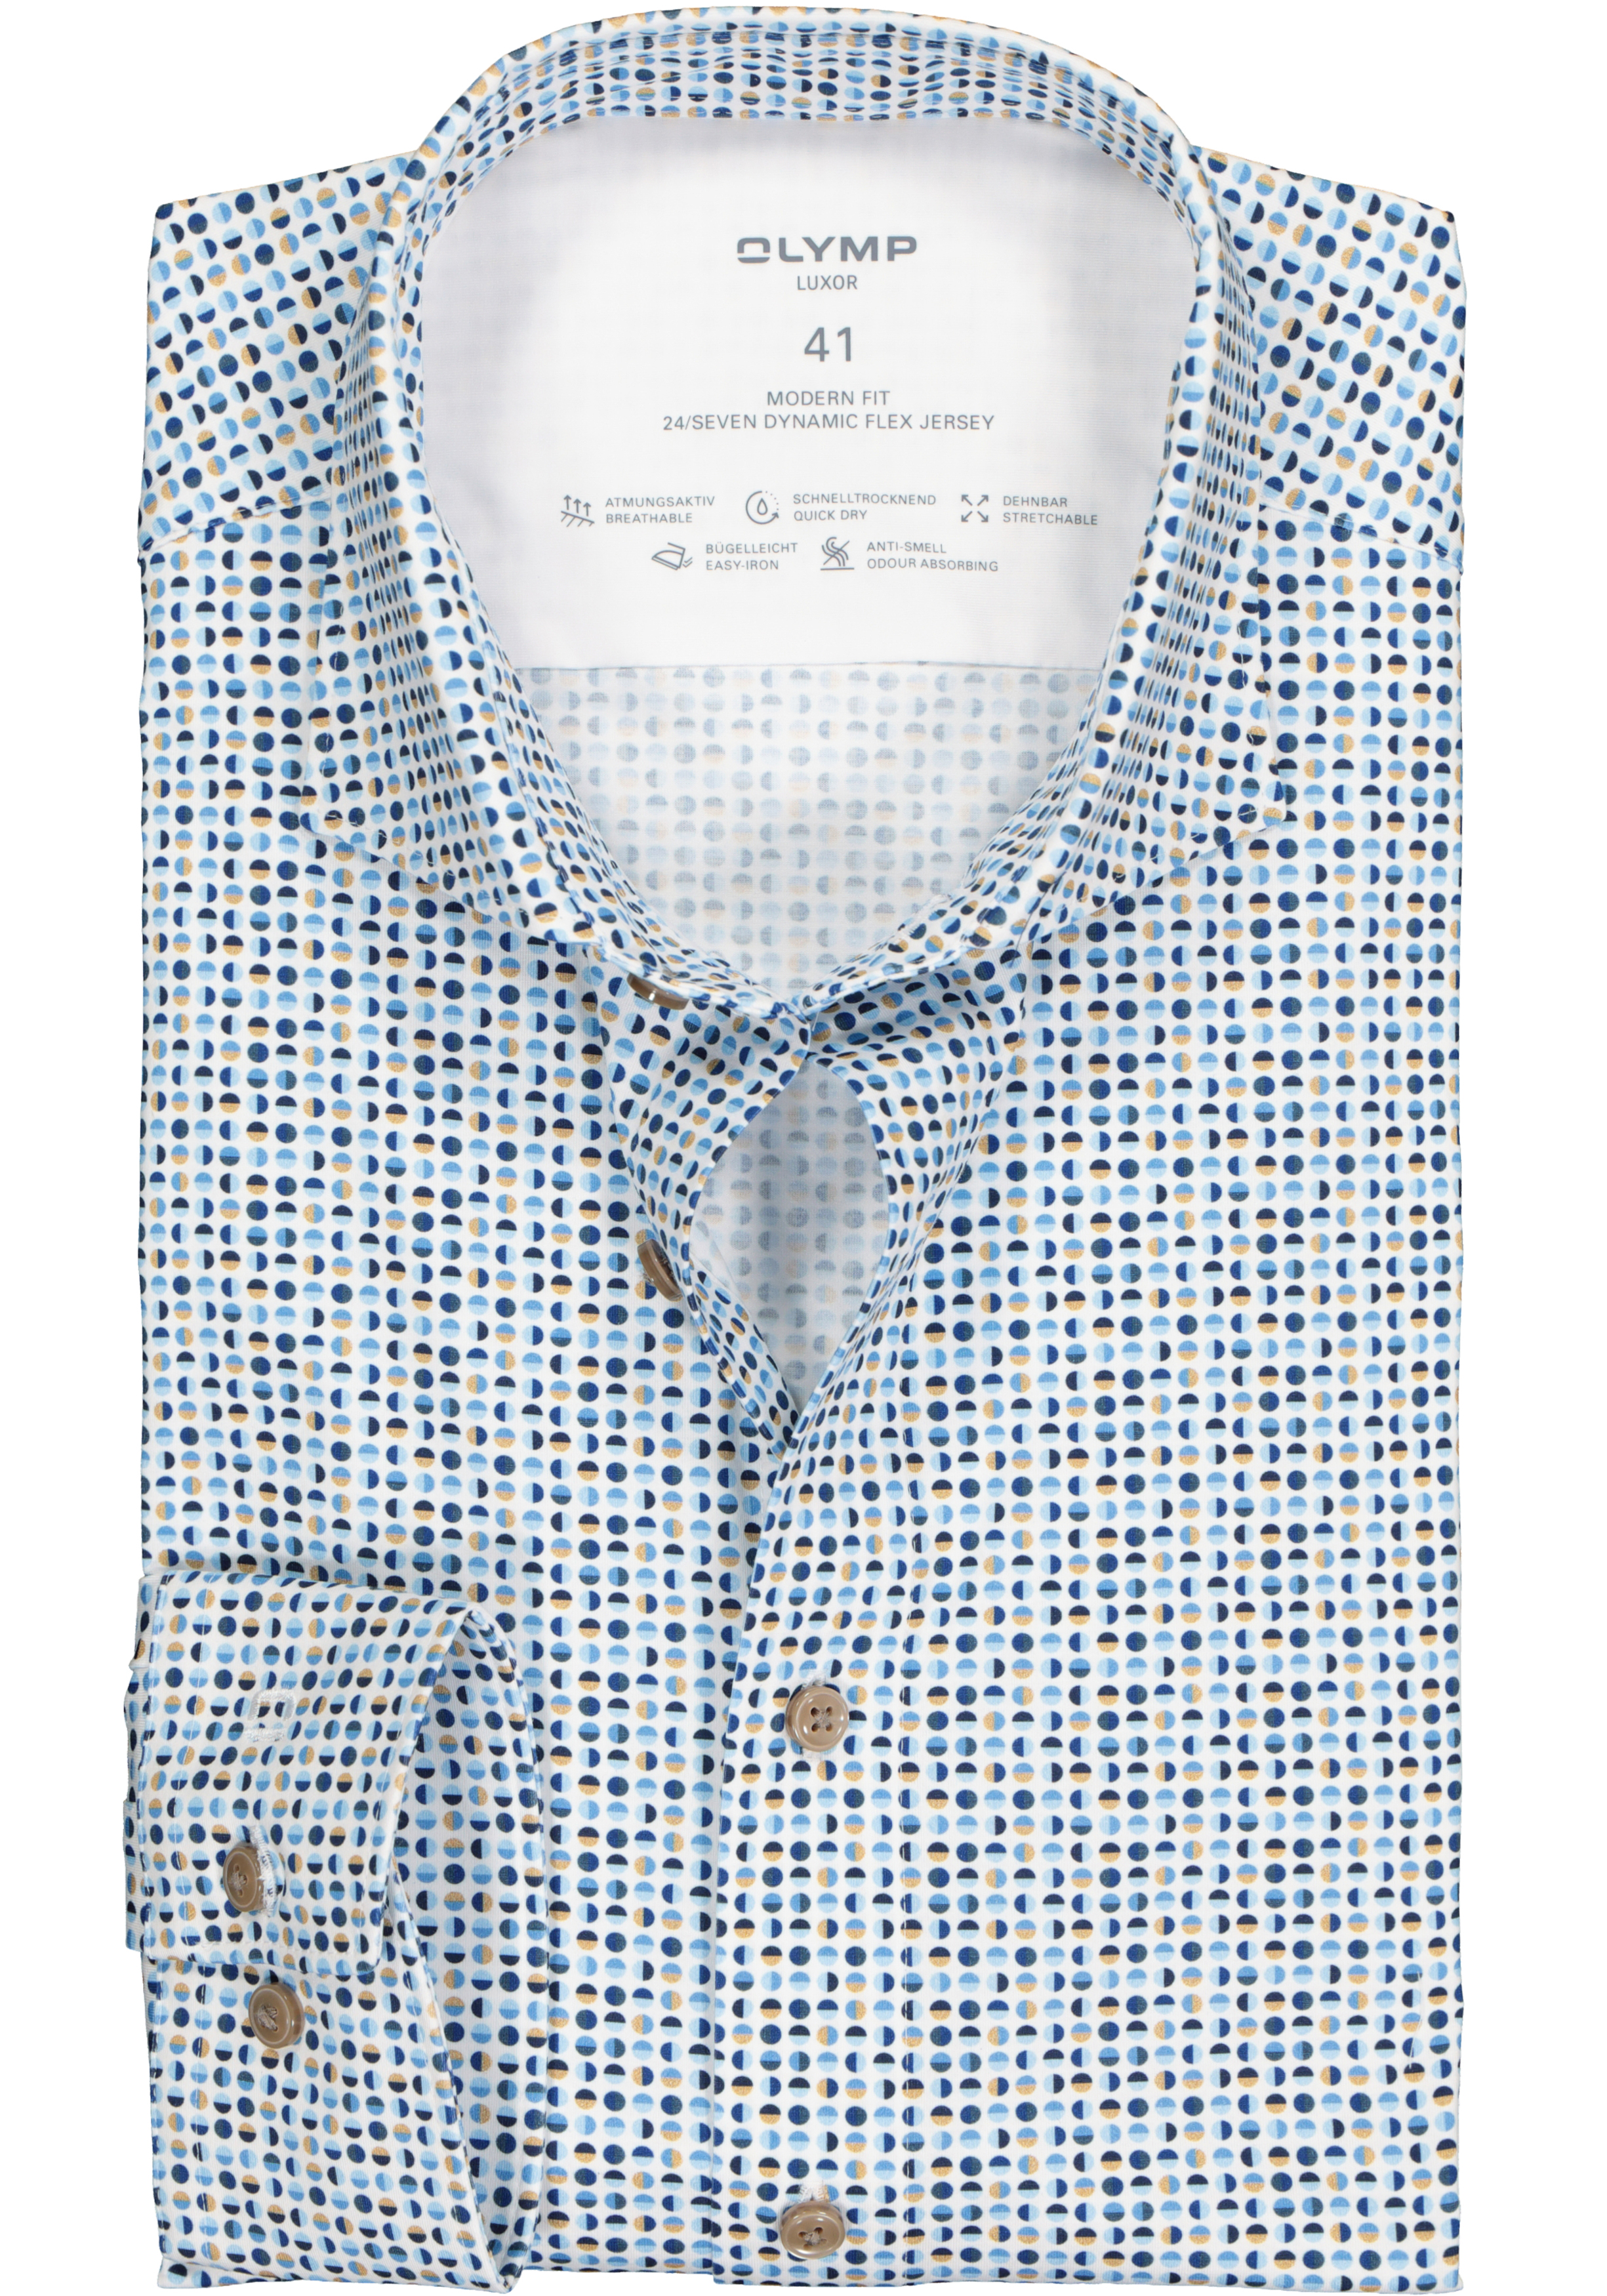 OLYMP 24/7 modern fit overhemd, tricot, wit met blauw en beige dessin (contrast)